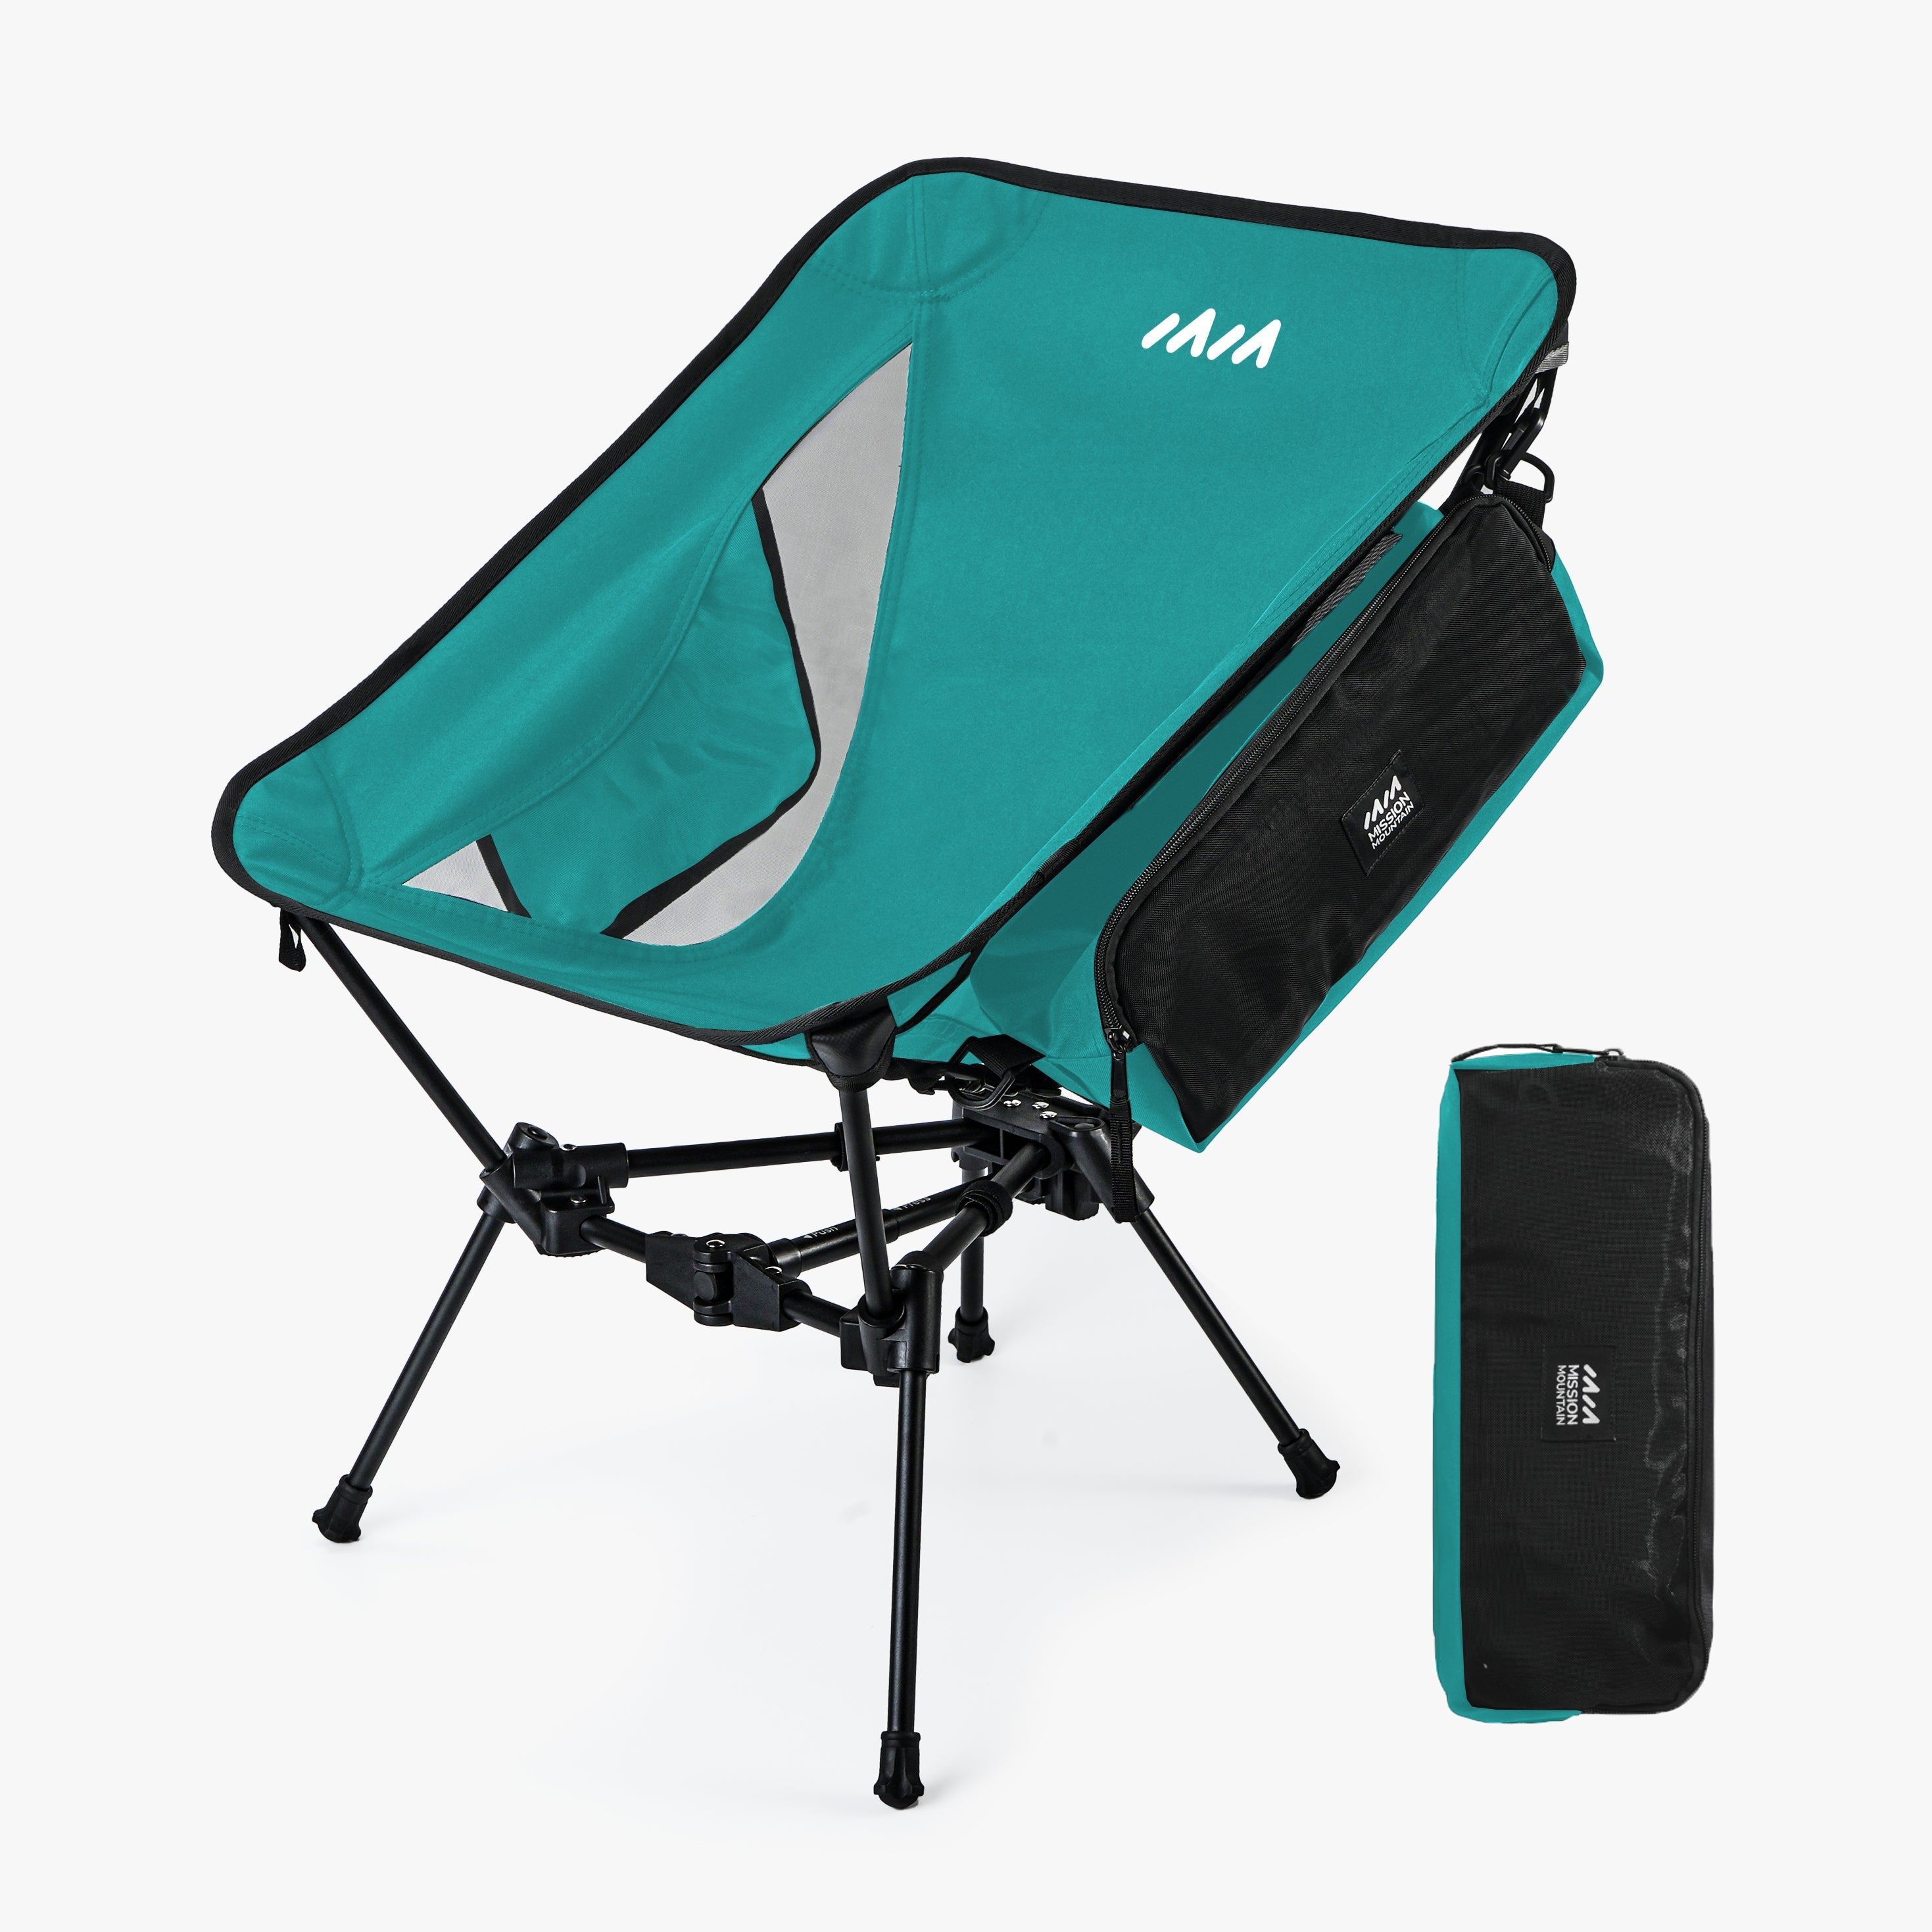 UltraPort Folding Chair